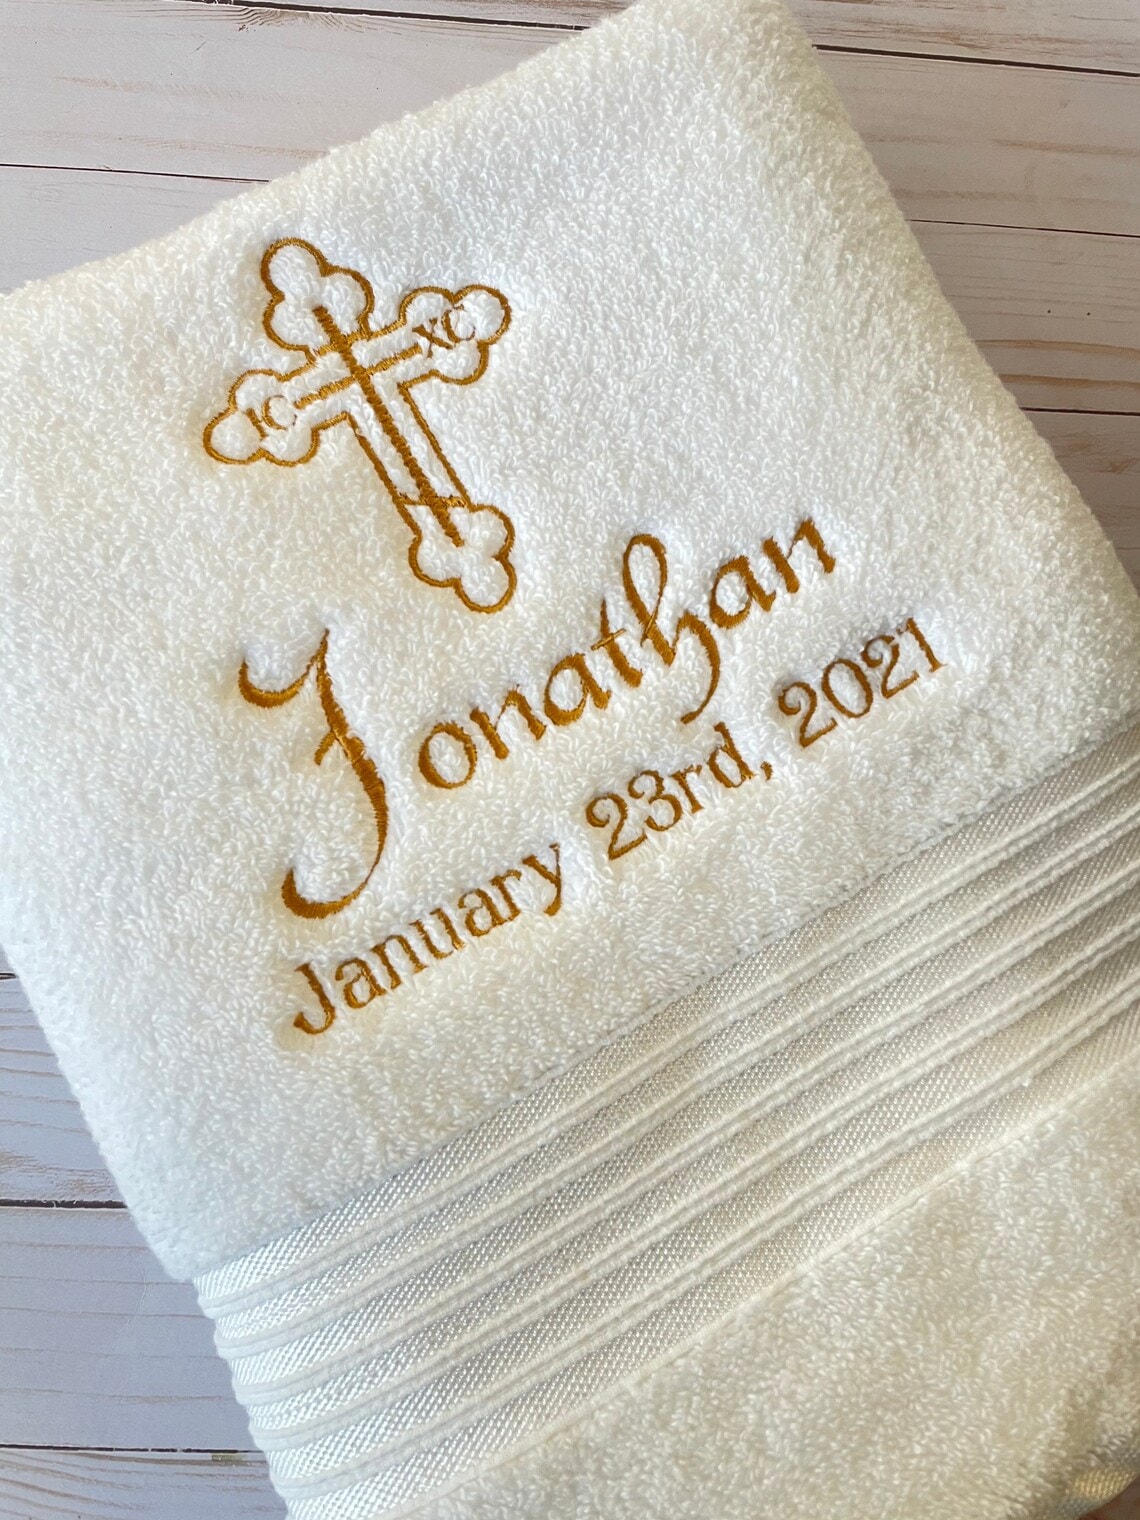 baptismal christening towel for ritual purification